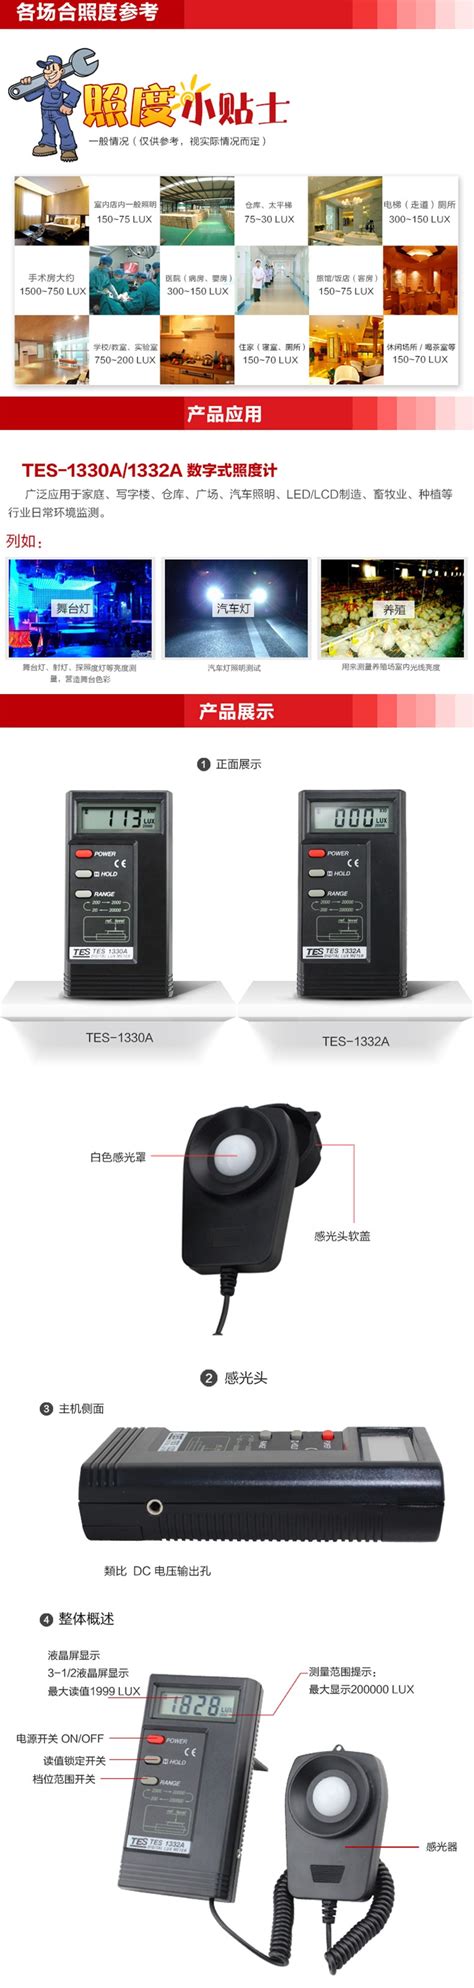 TES-1330高精度数字照度计使用说明书-照度计-数字式照度计首选-台湾泰仕官网